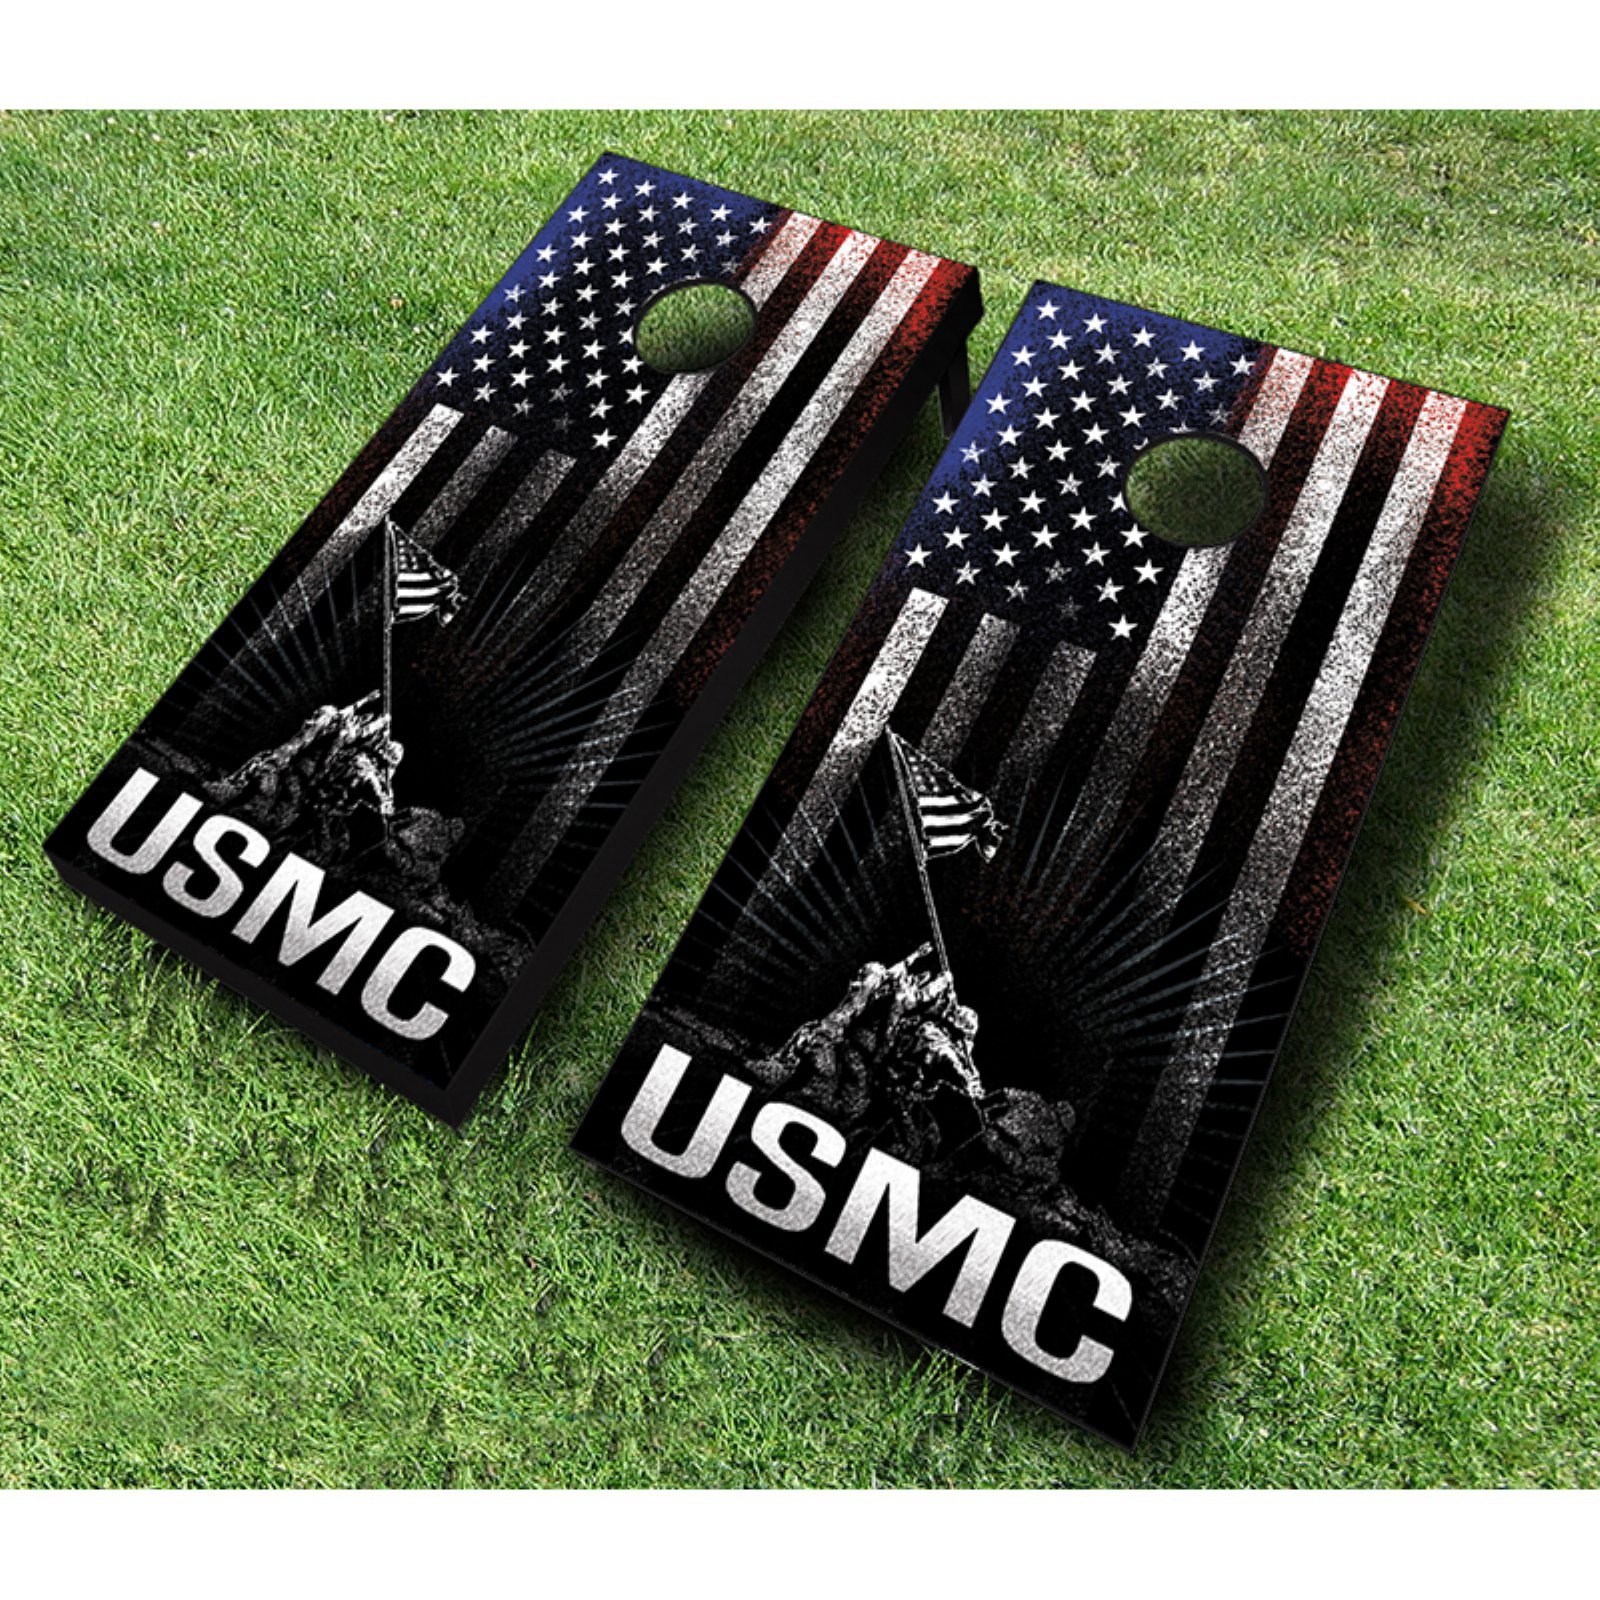 AJJ Cornhole USMC Hanging Stripes Cornhole Set - image 1 of 1